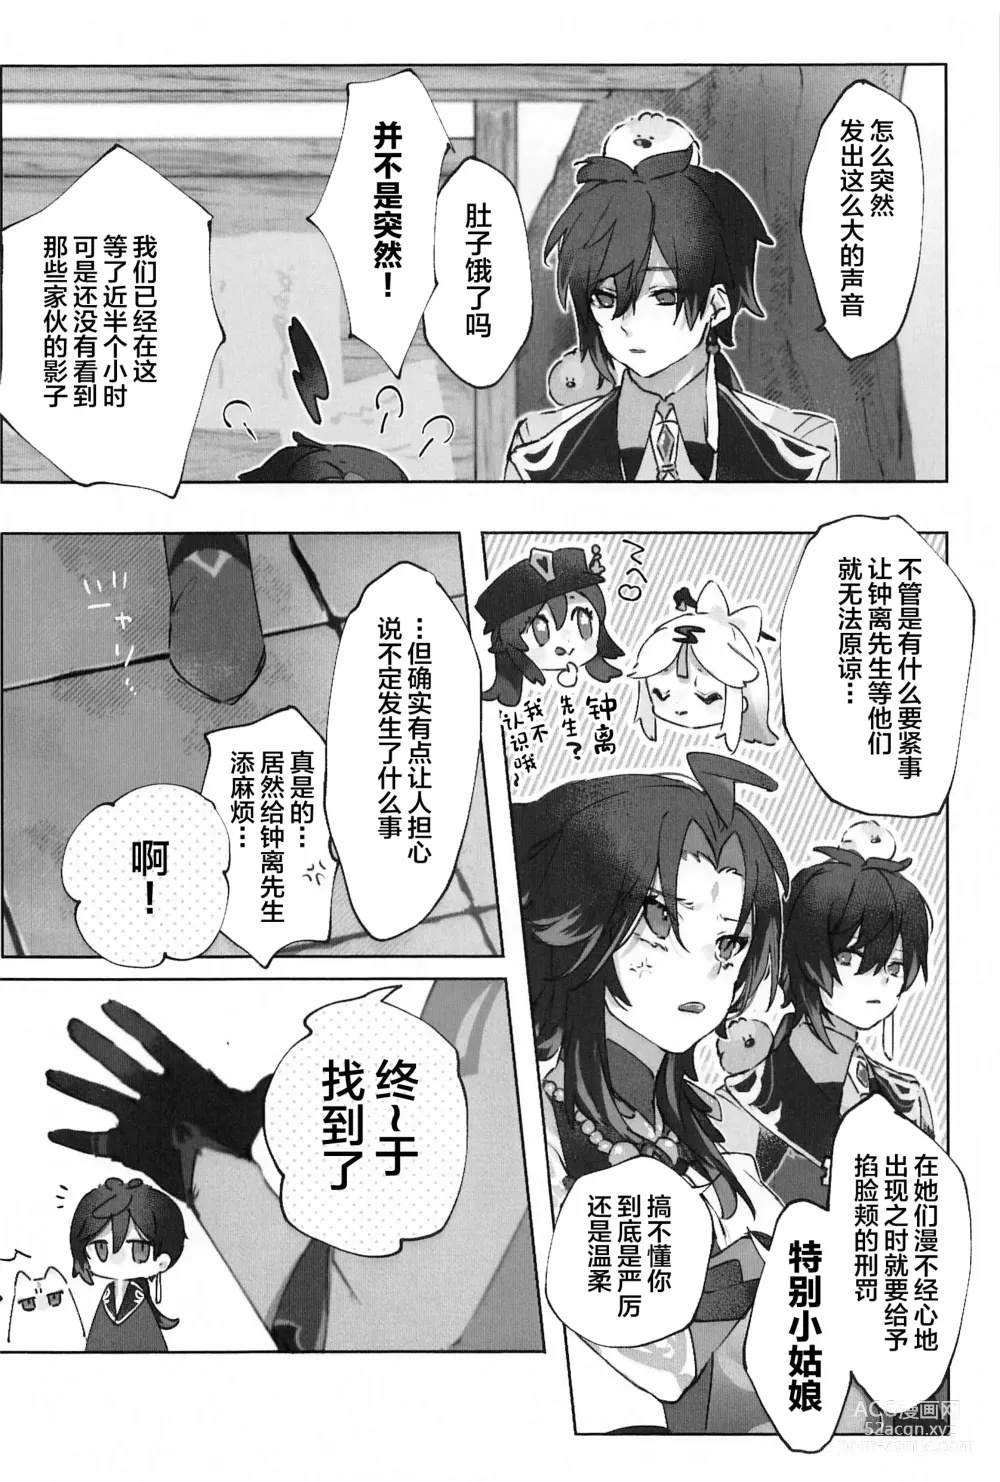 Page 6 of doujinshi Okawari.